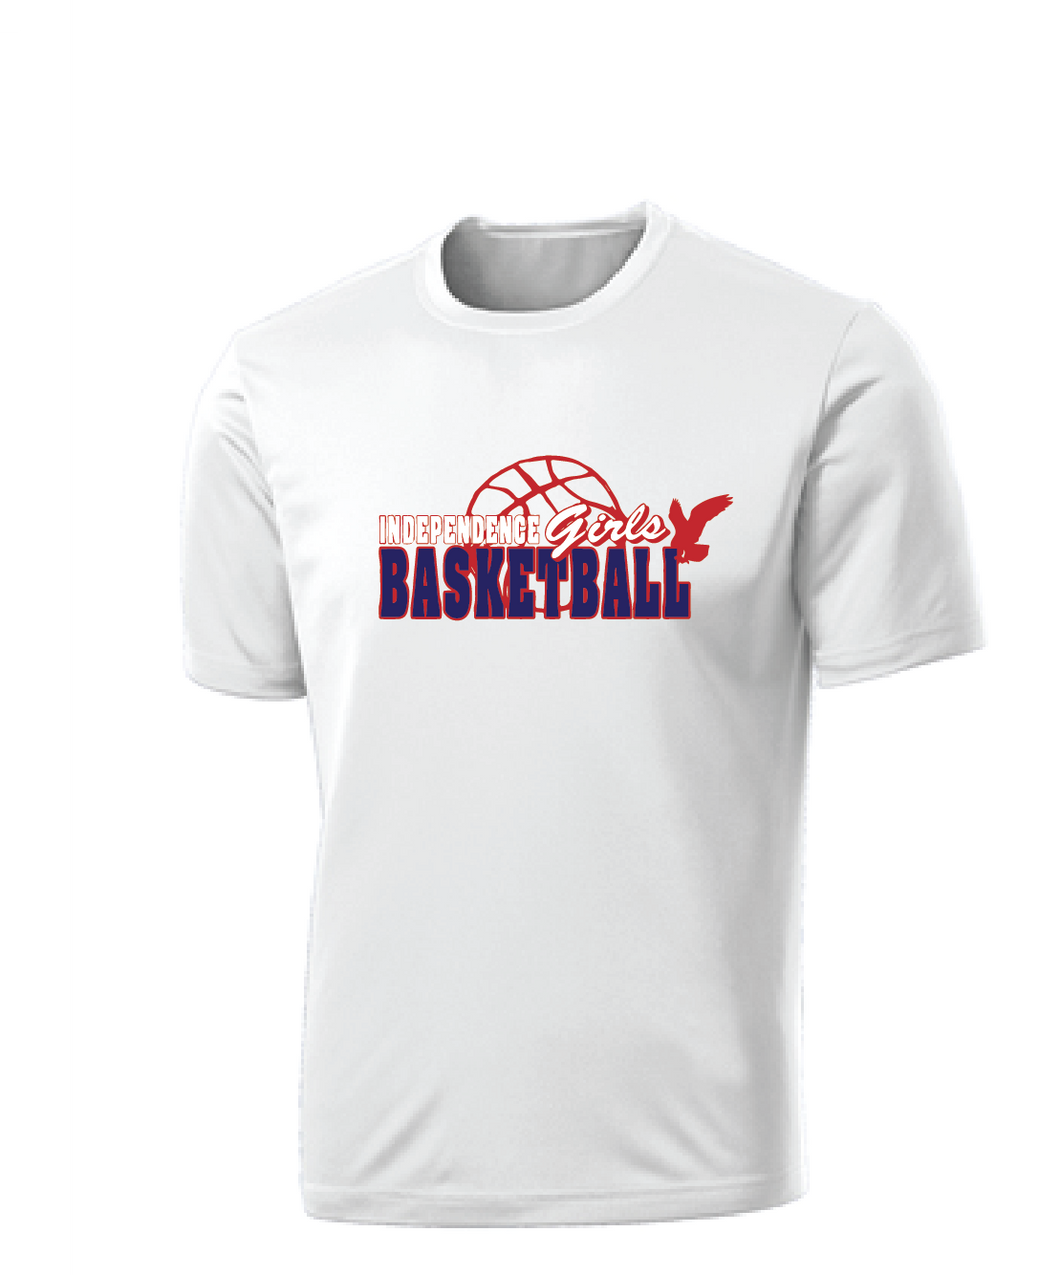 Performance Short Sleeve T-Shirt / White / Independence Middle Girls Basketball